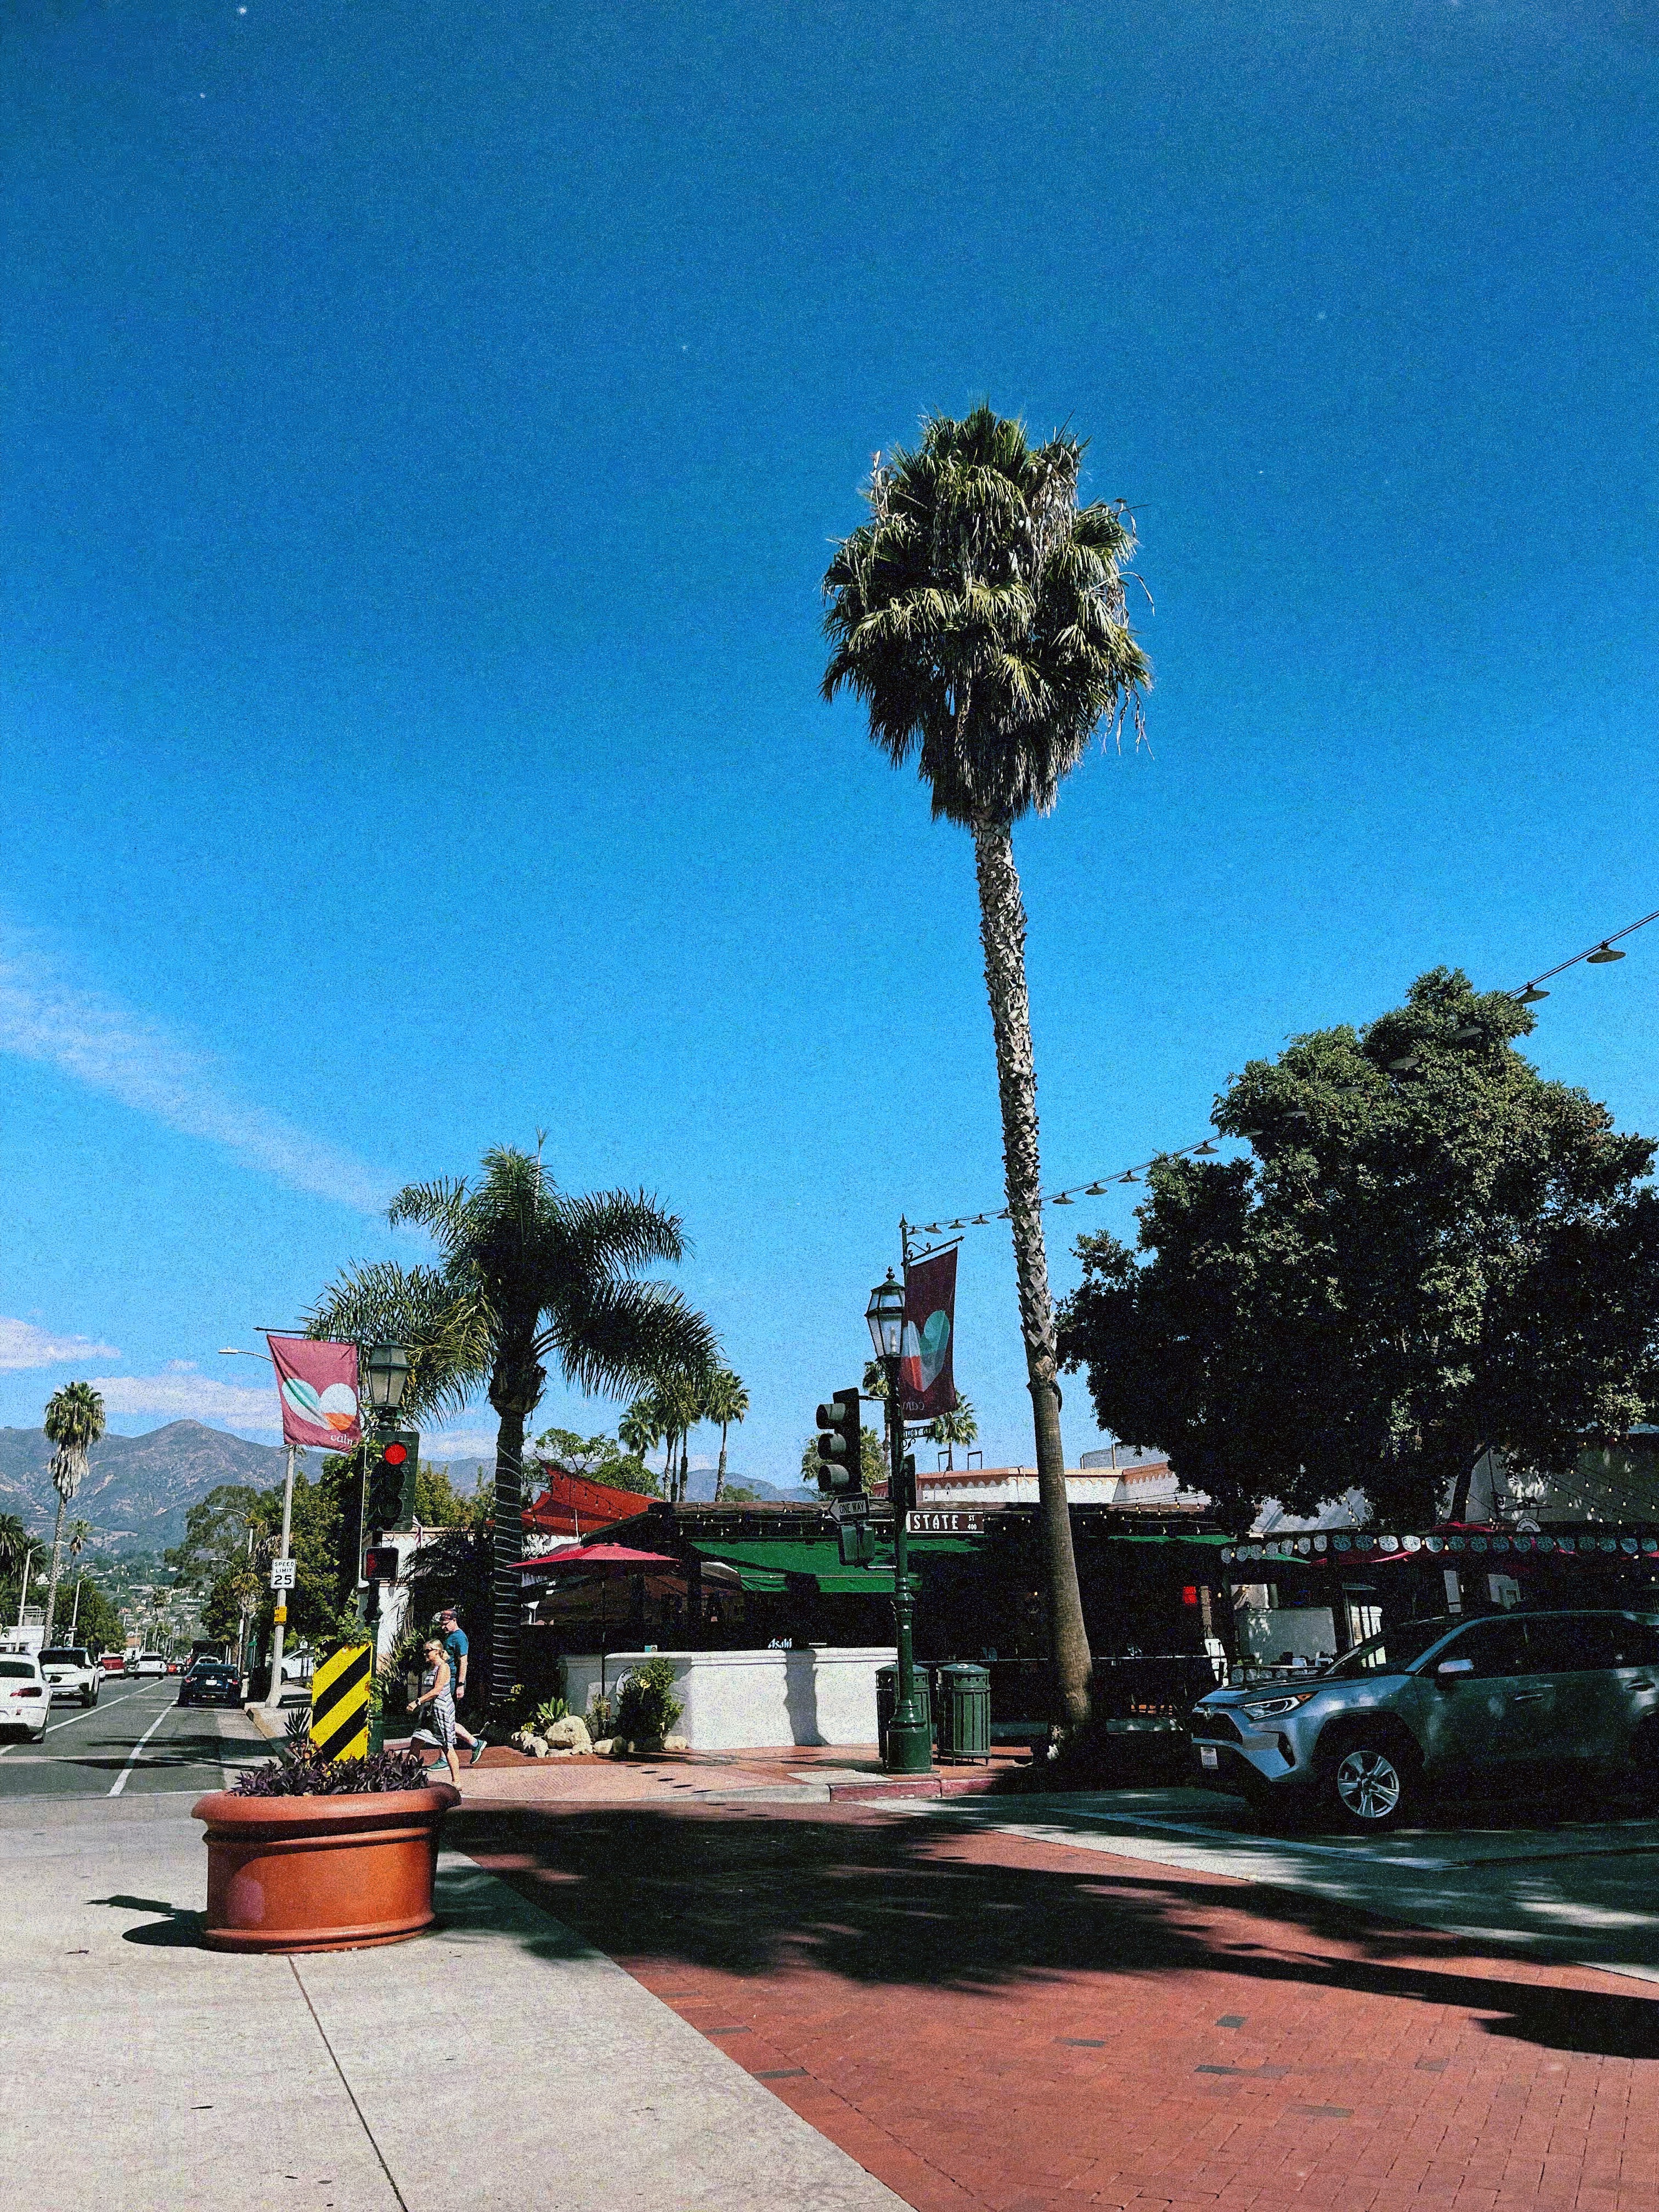 Santa Barbara dreamin’